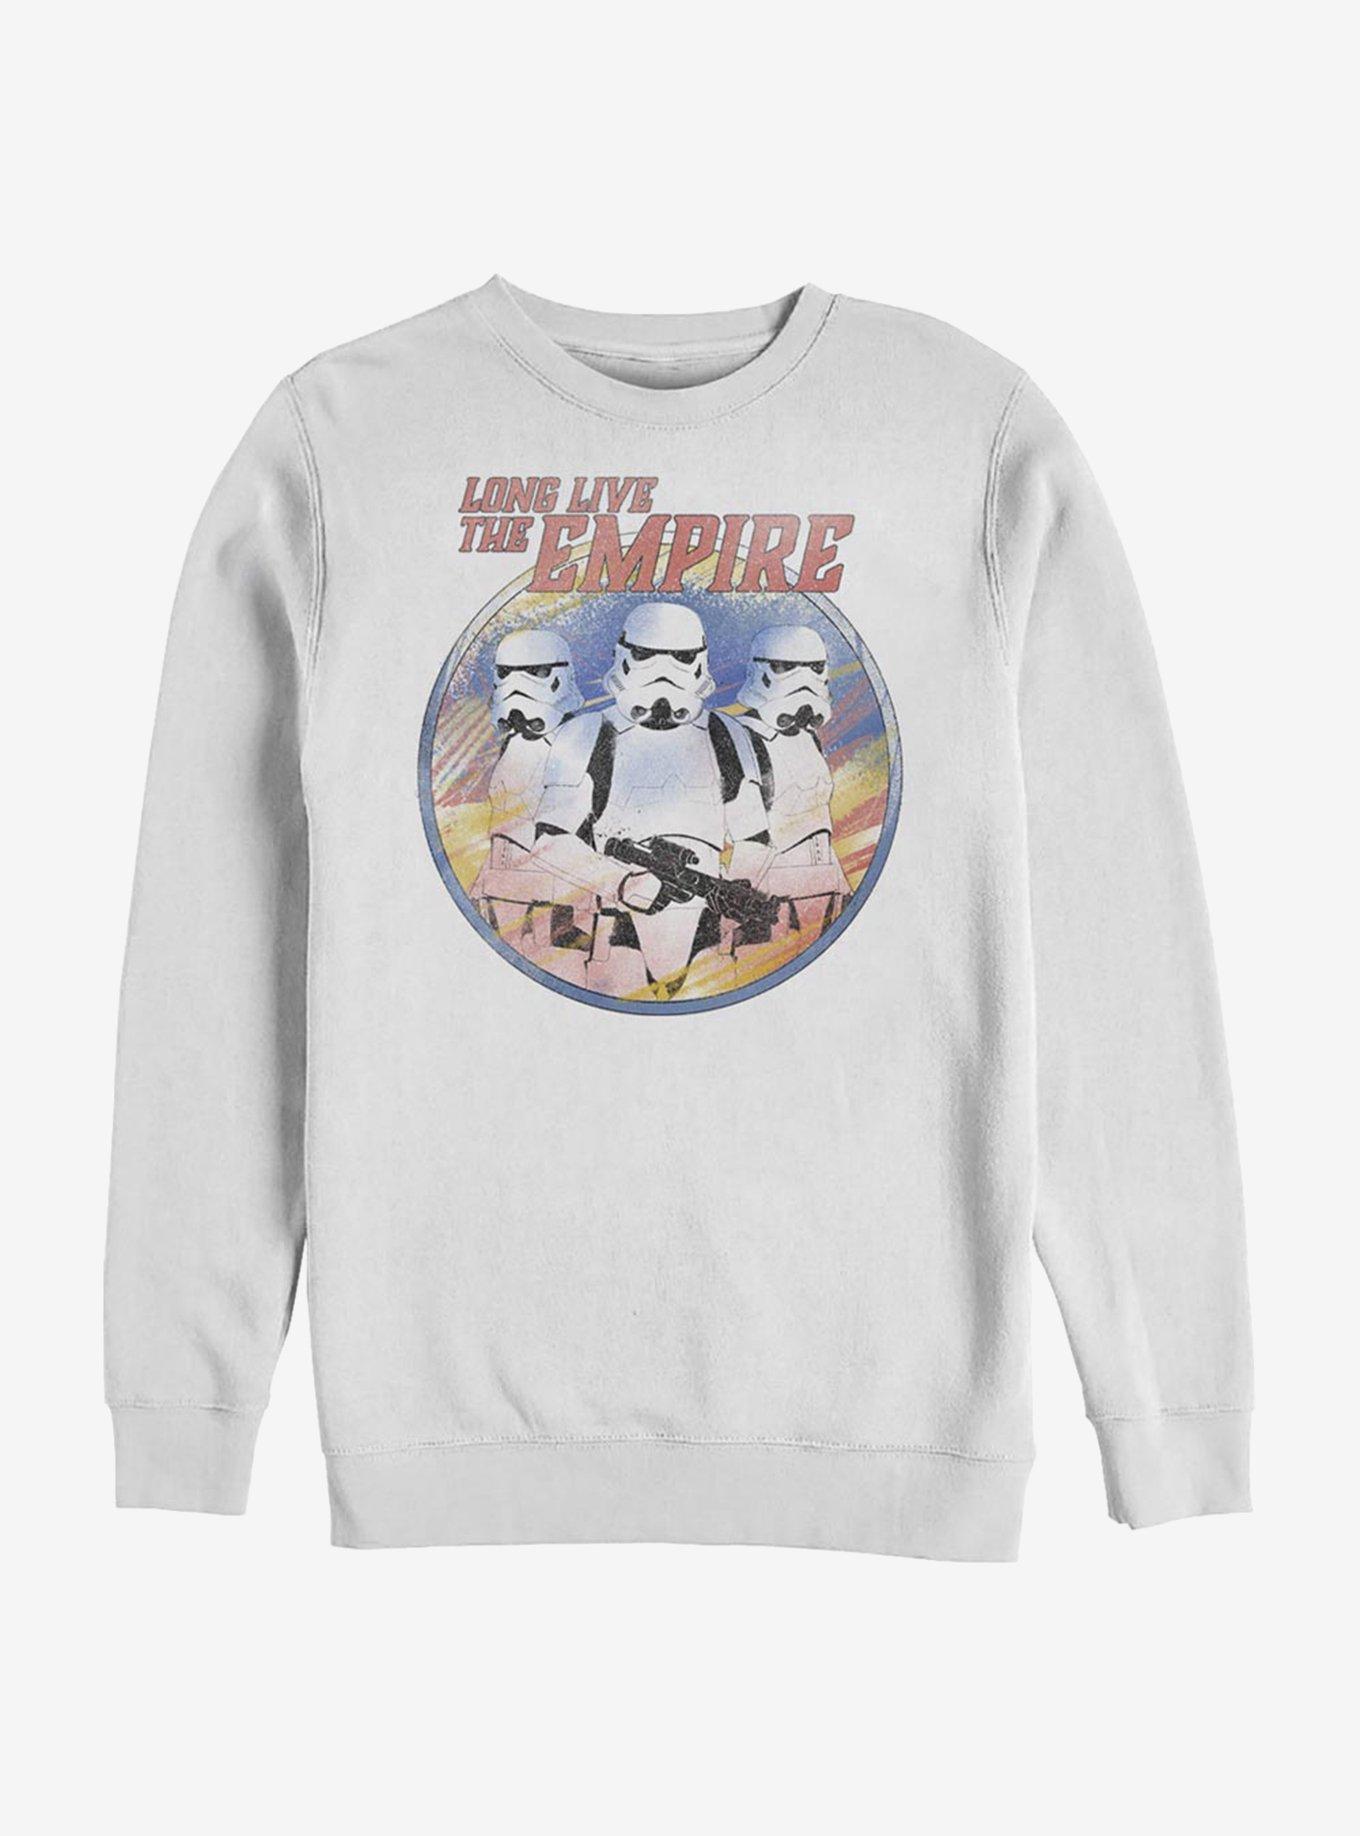 Star Wars The Mandalorian Long Live The Empire Crew Sweatshirt, WHITE, hi-res